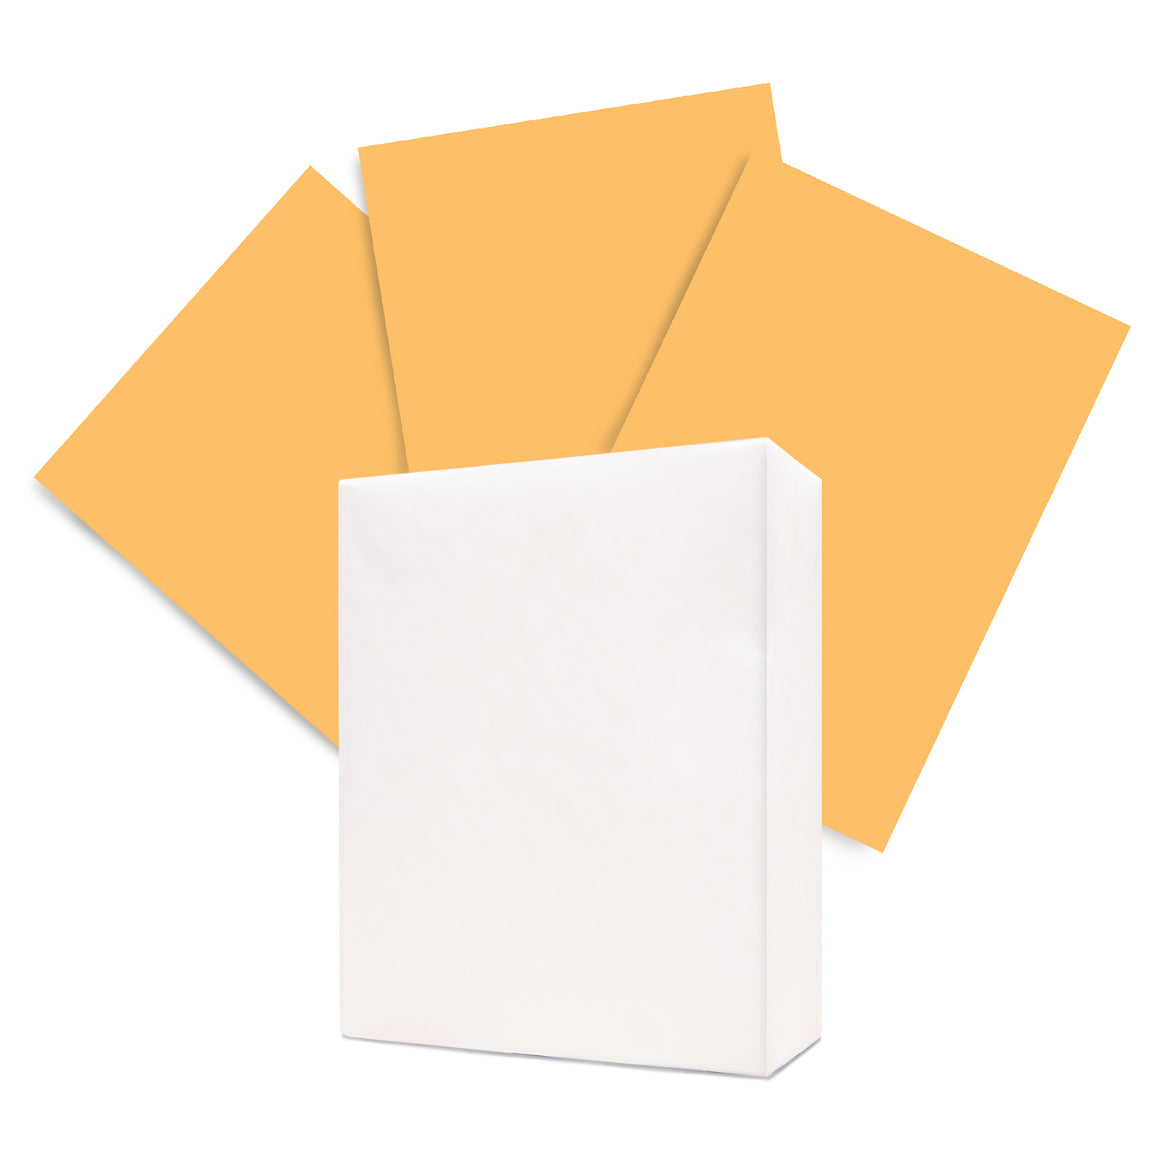 EAGLE COLOR (30% PCW) 8.5" X 11" Gold Colored Copy Paper (500 Sheets/Ream)